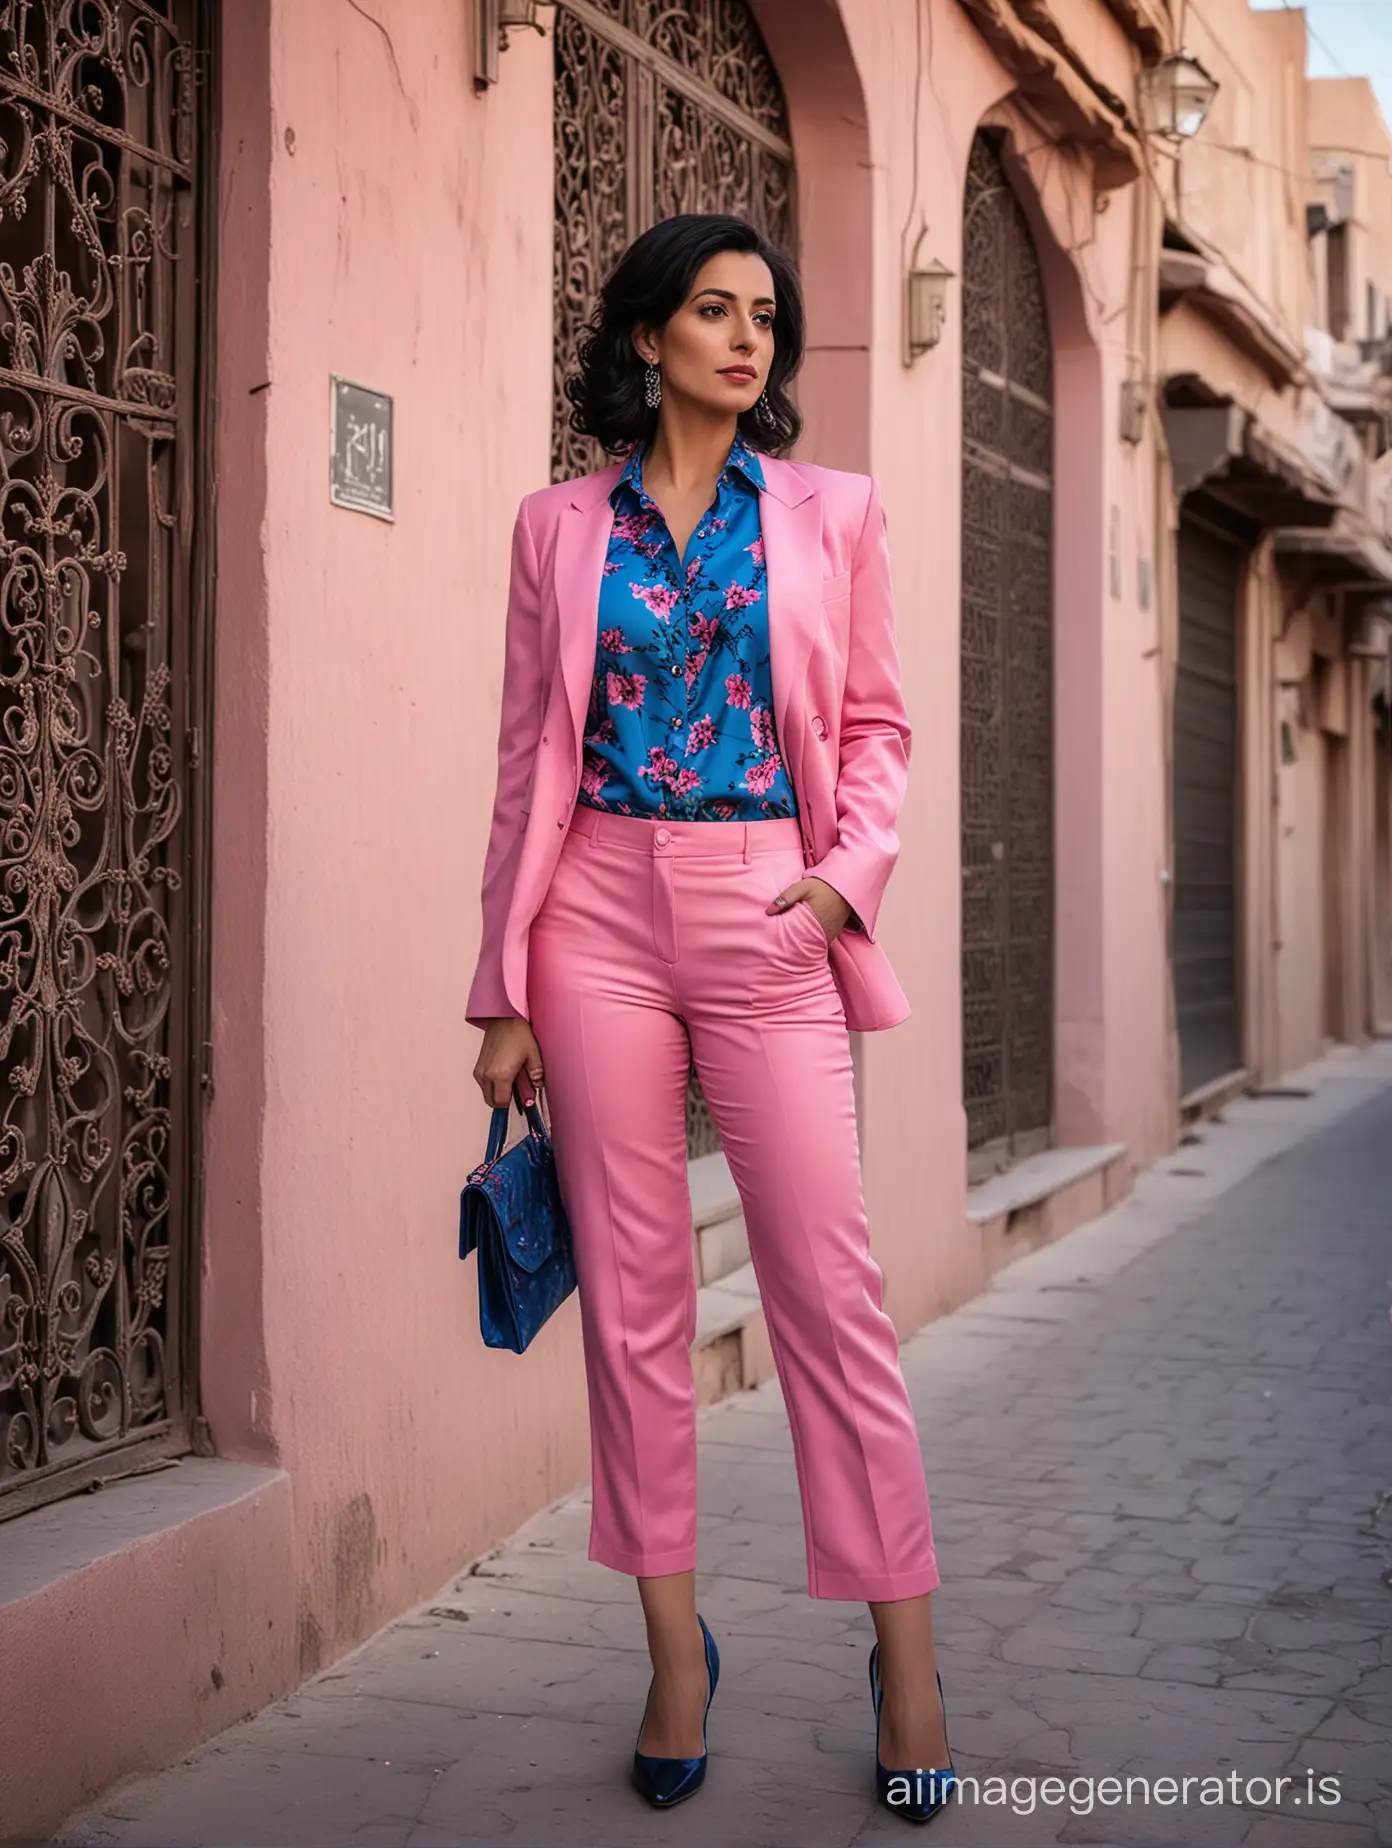 Iranian woman 40 years old, pink suits with blue flower pattern, blue shirt, white high heels, black hair, full body shot, pink lipsticks, in Kashan street, dramatic lighting